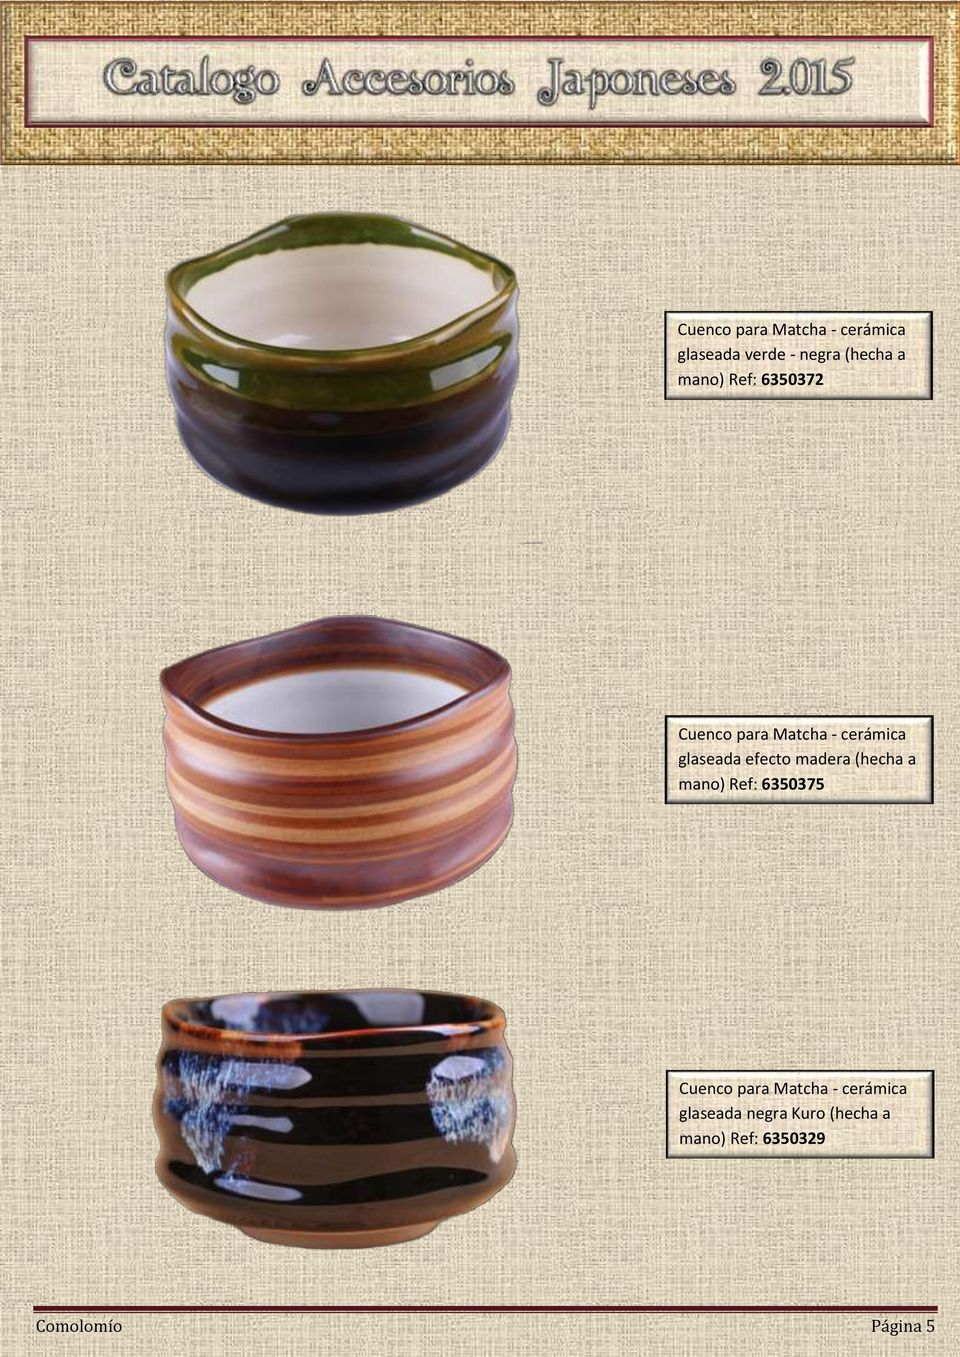 madera (hecha a mano) Ref: 6350375 Cuenco para Matcha - cerámica